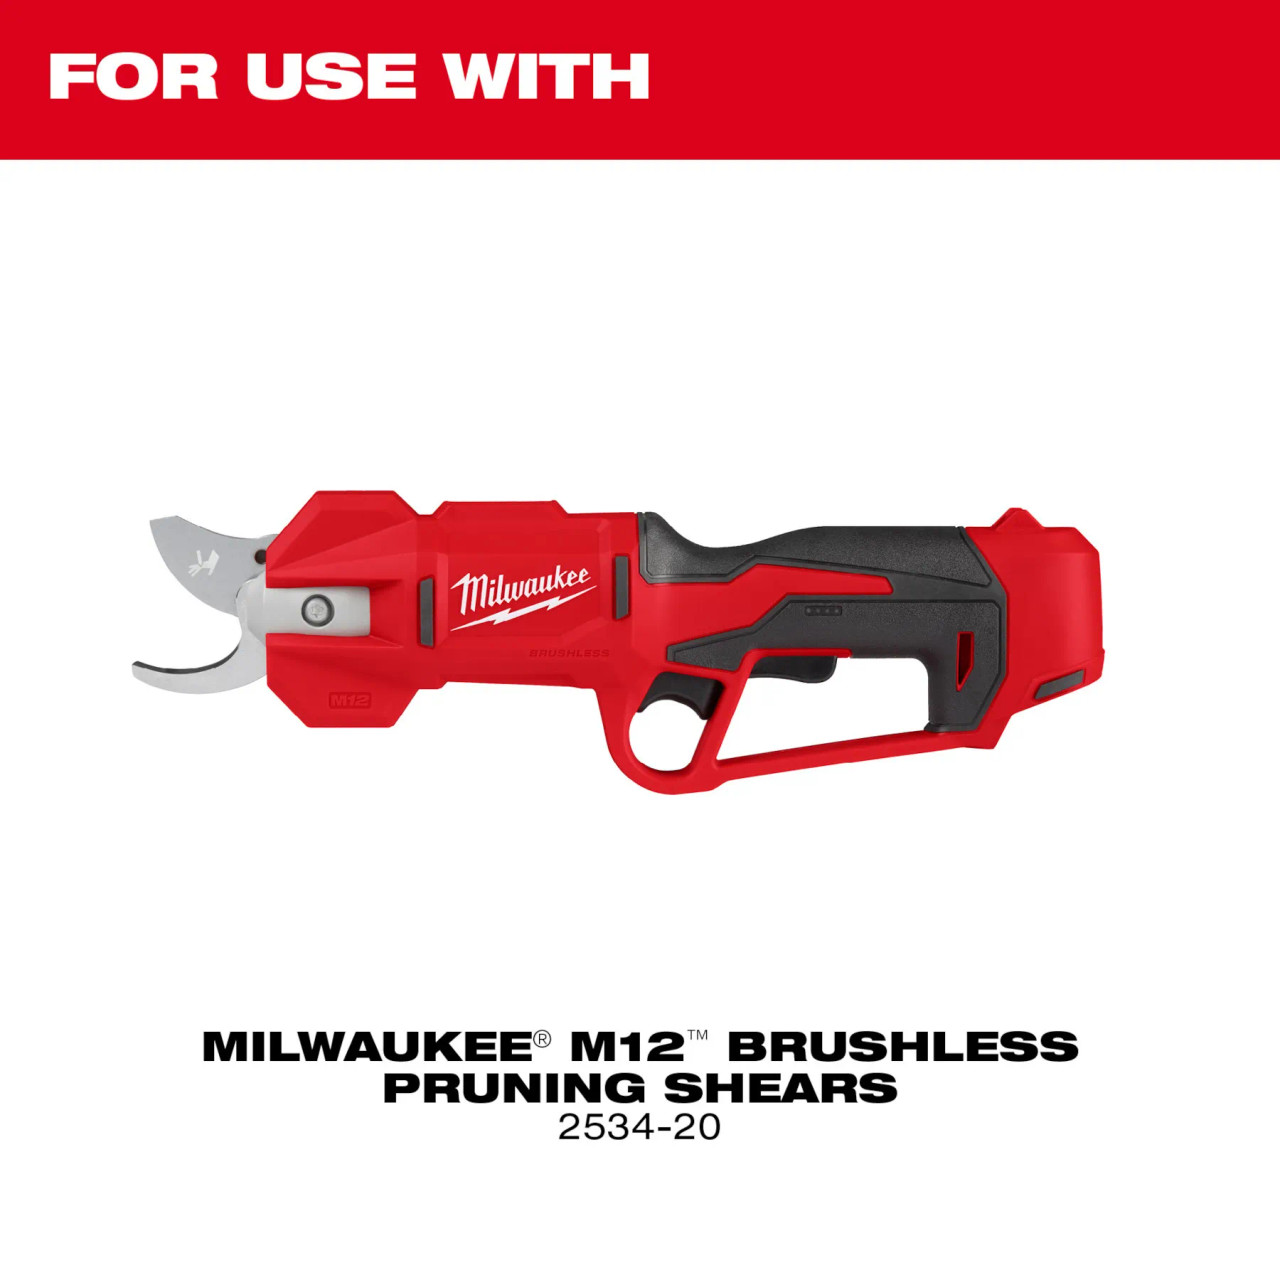 M12 Brushless Pruning Shears Replacement Blade